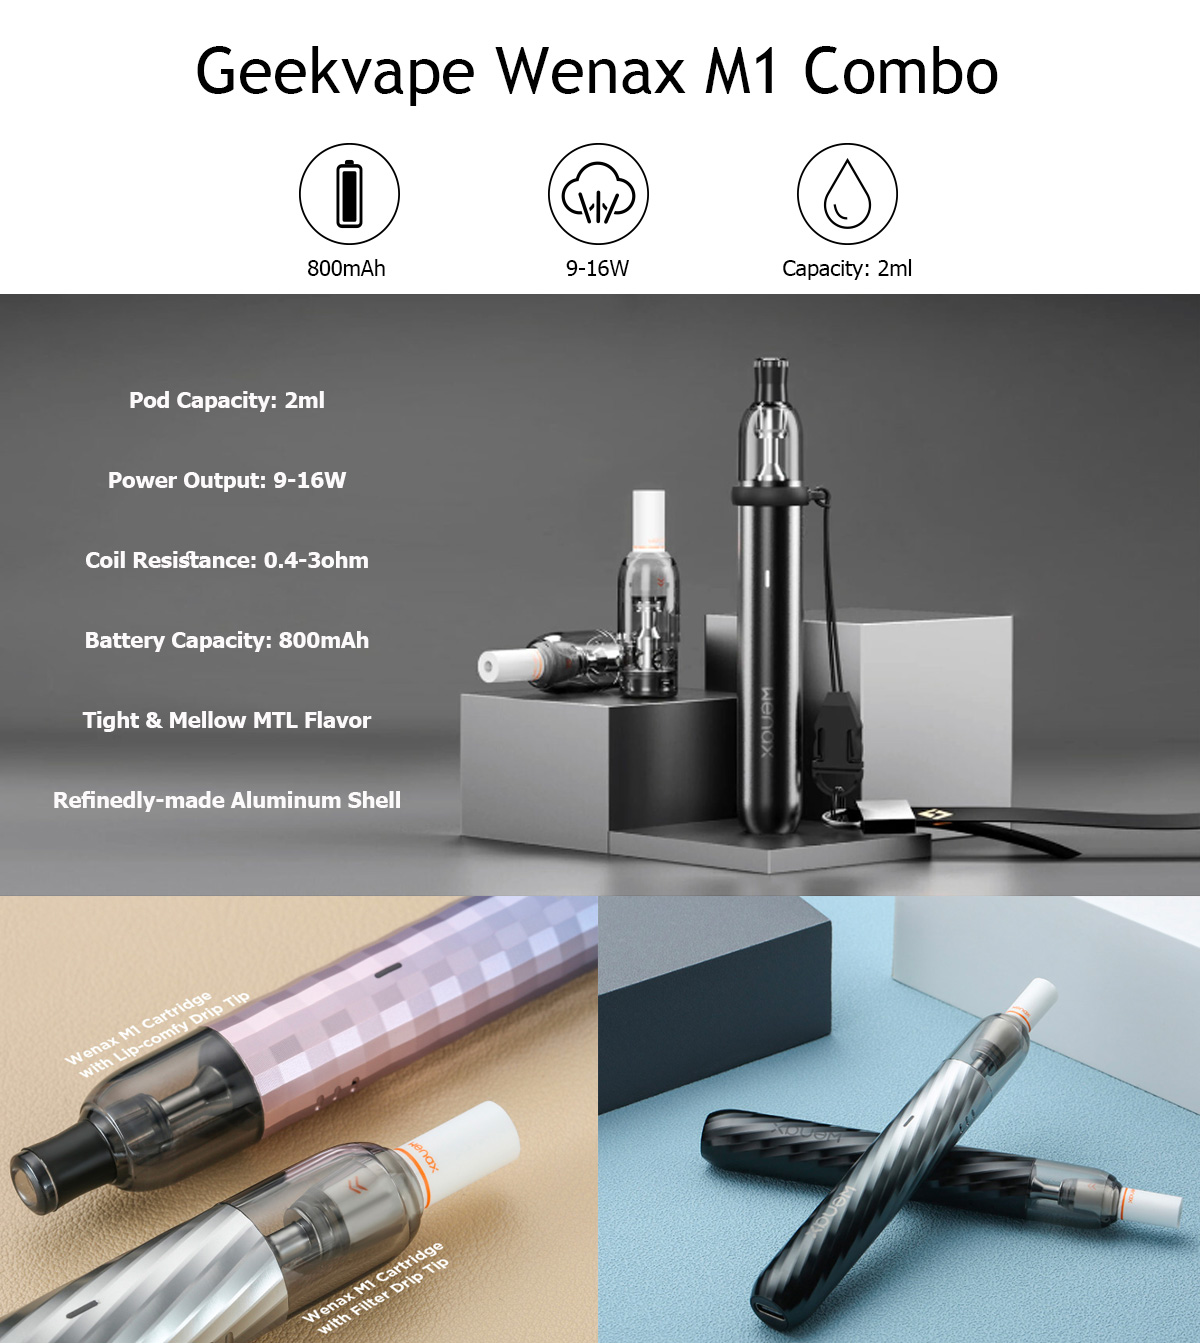 Geekvape Wenax M1 Combo new launching